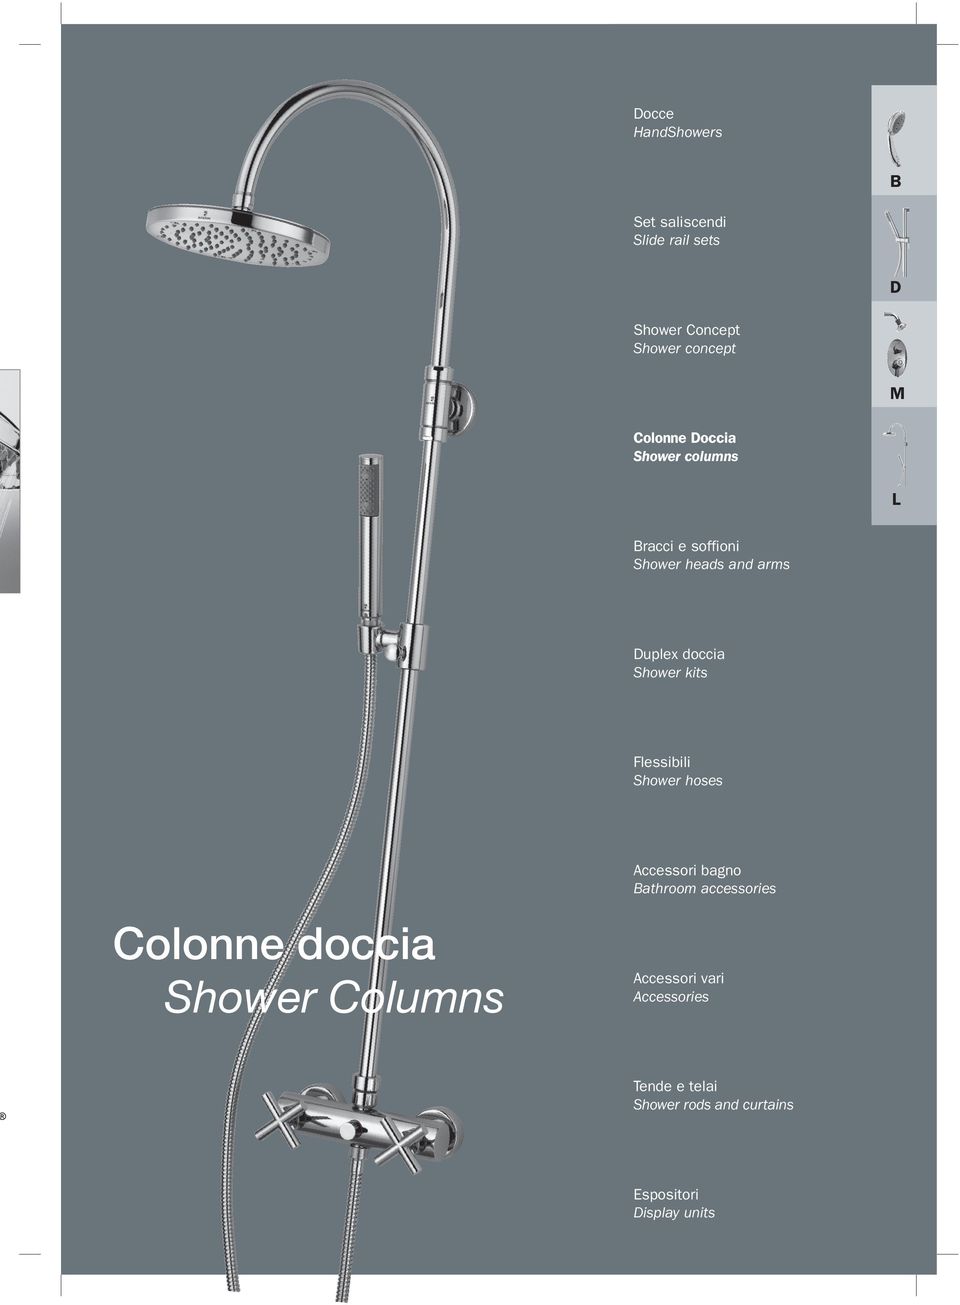 kits Flessibili Shower hoses Colonne doccia Shower Columns Accessori bagno athroom